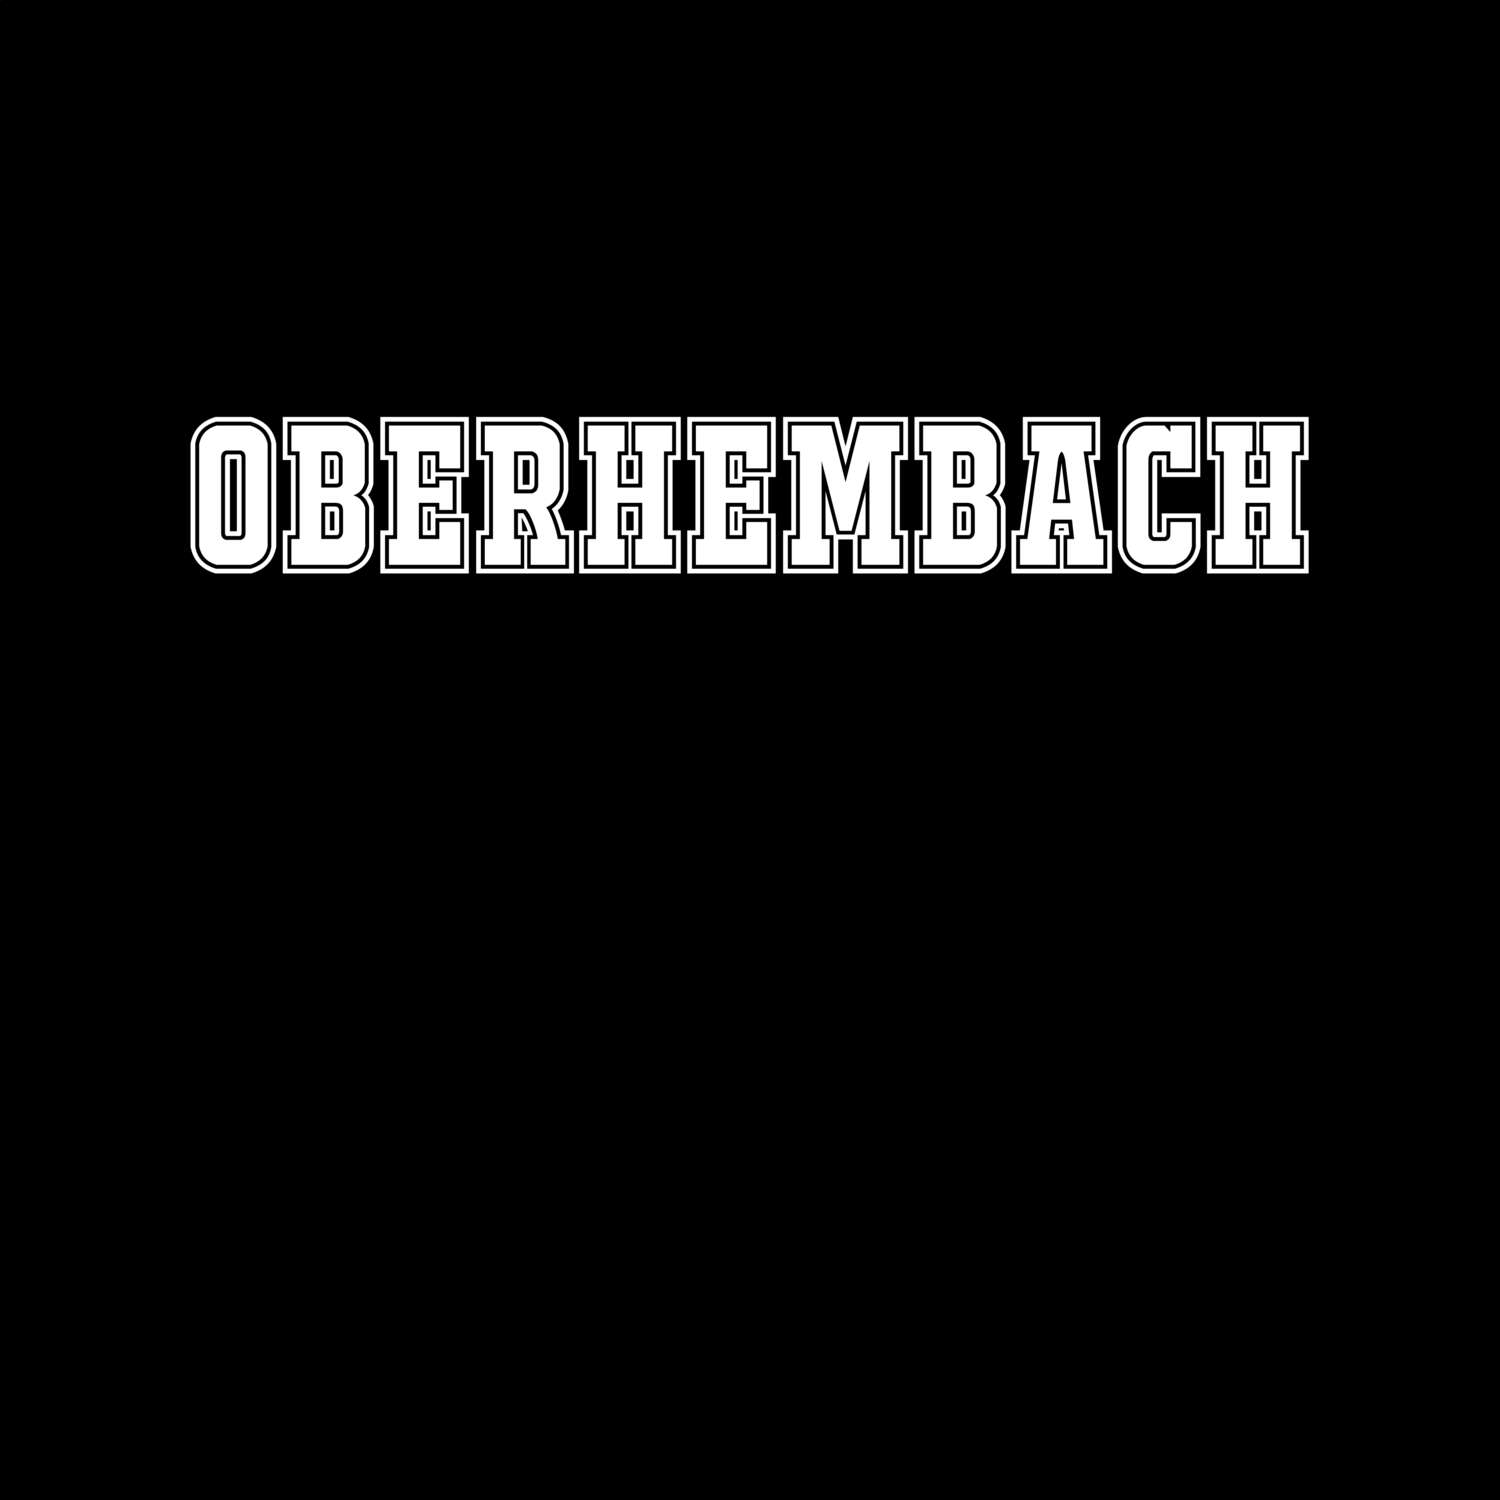 Oberhembach T-Shirt »Classic«